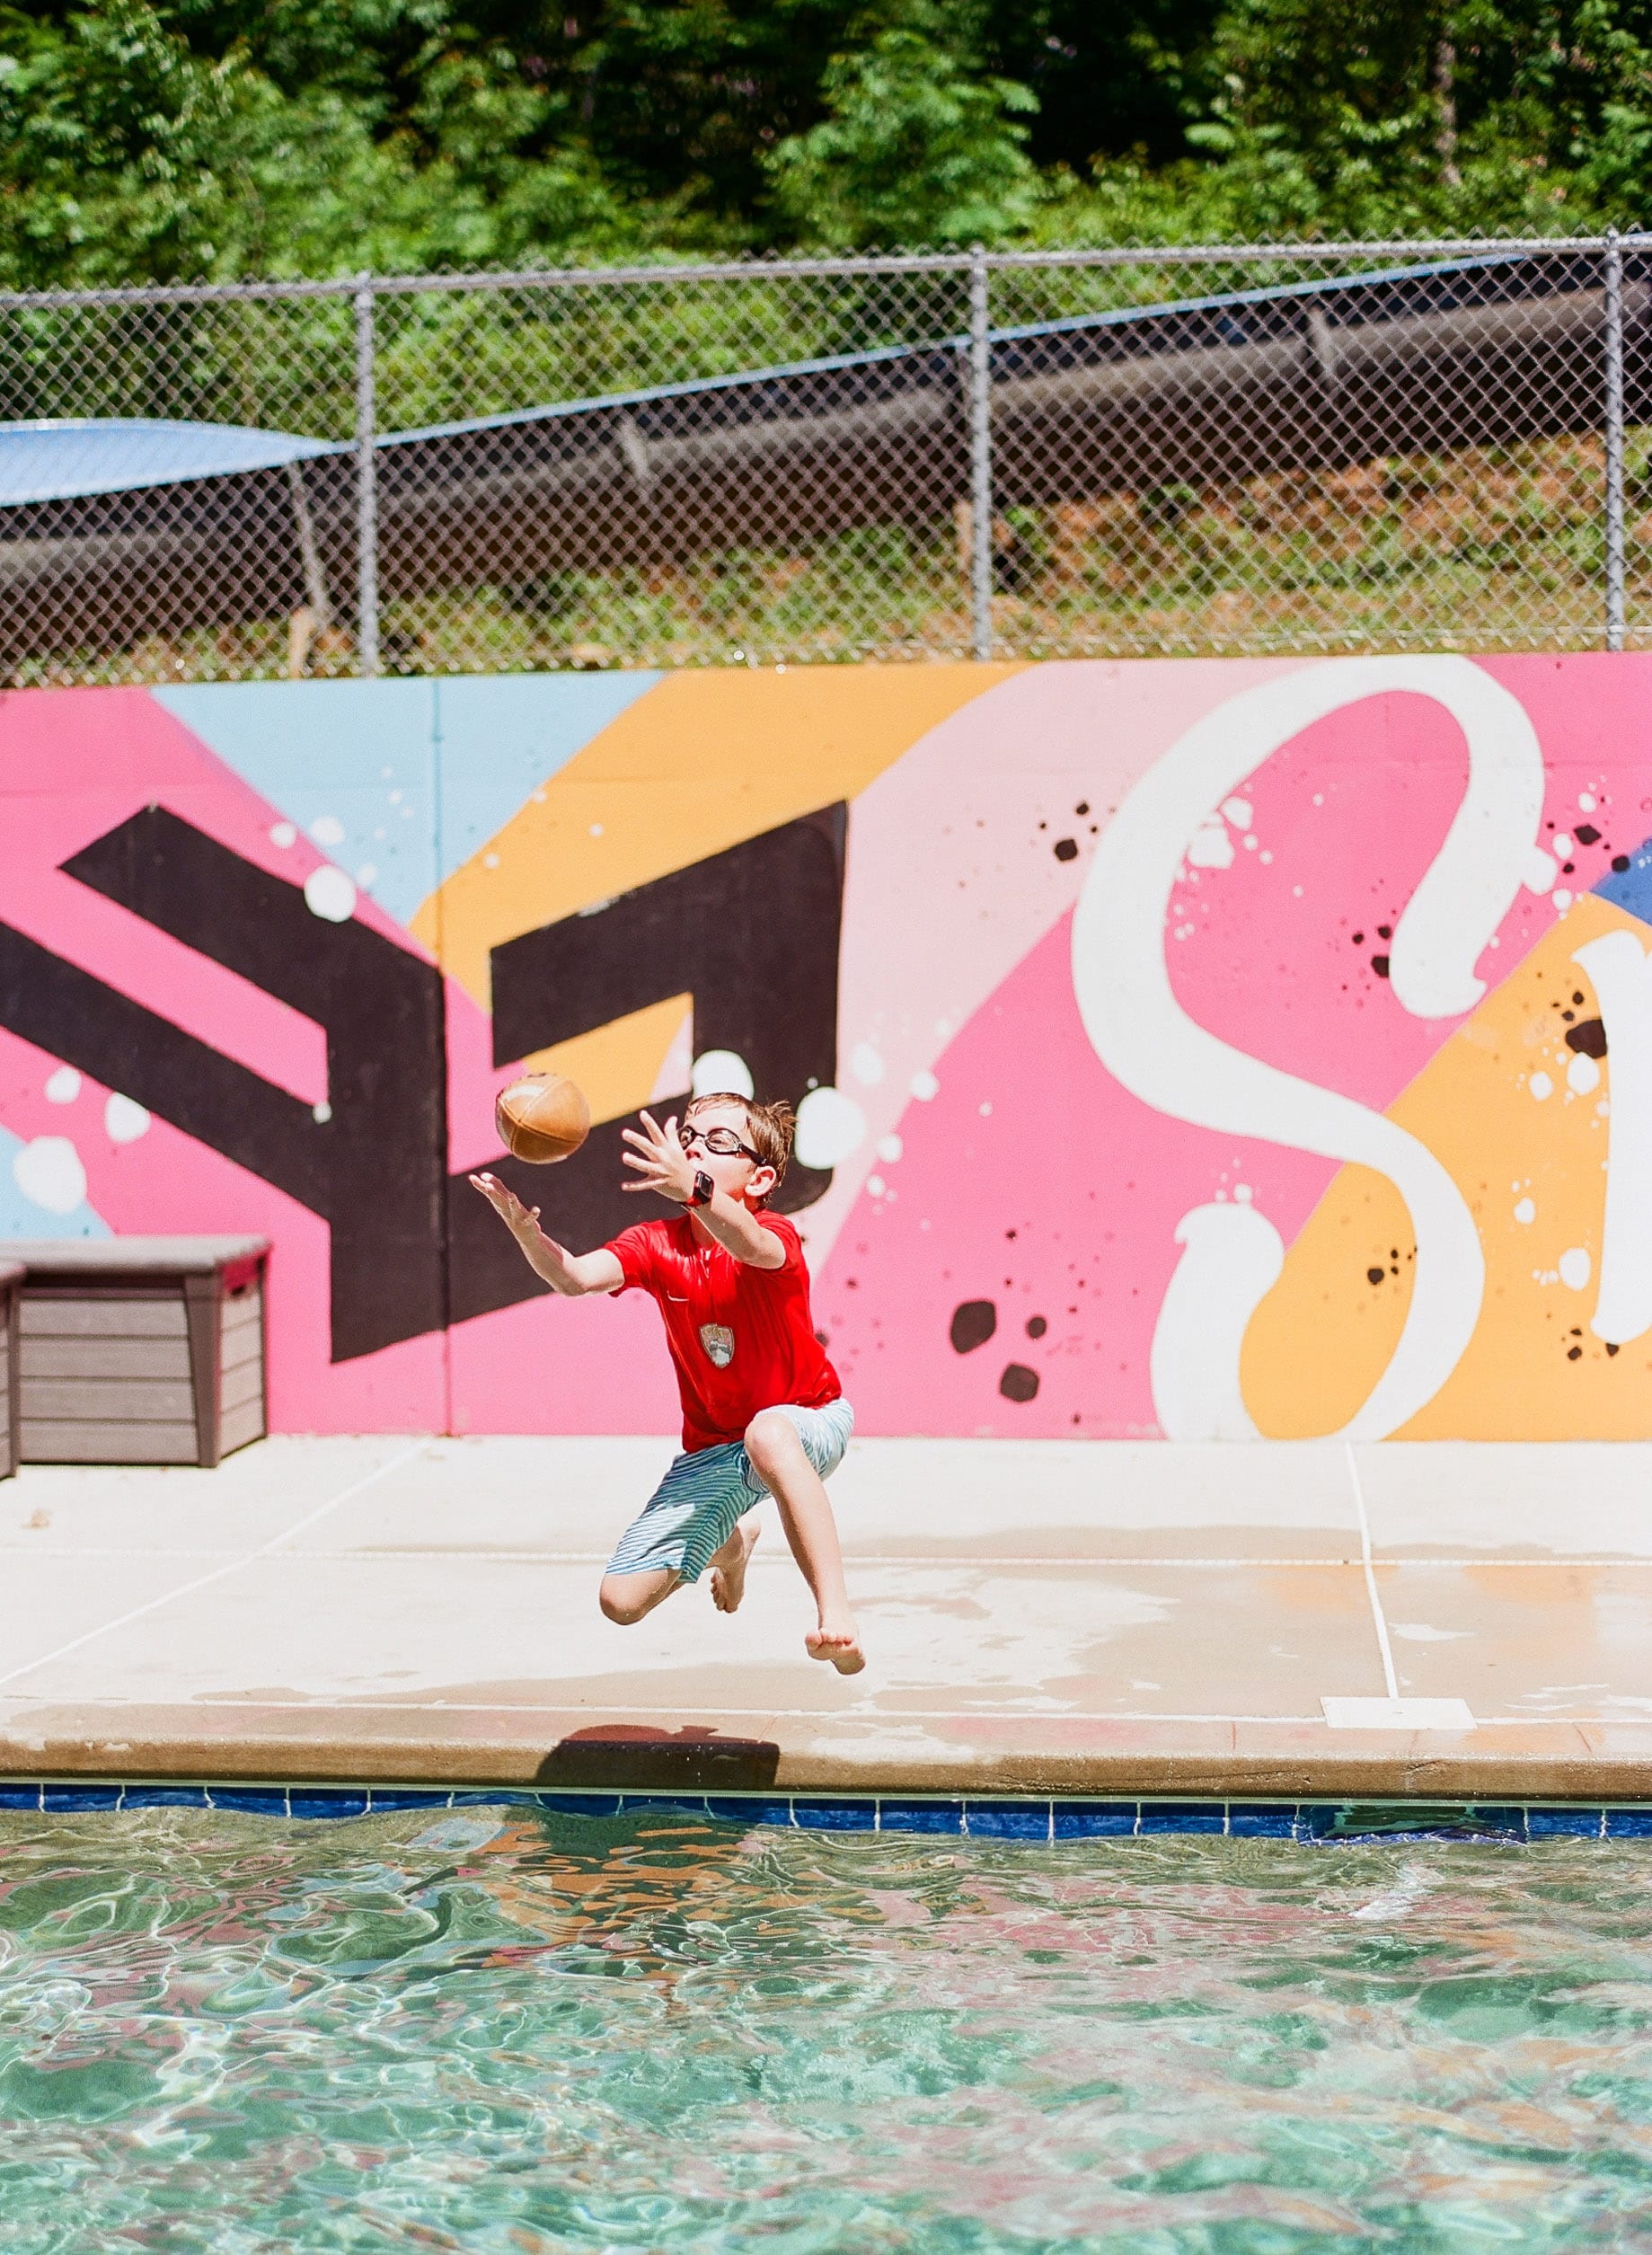 Kodak Ektar 100 kid jumping for football in pool photo